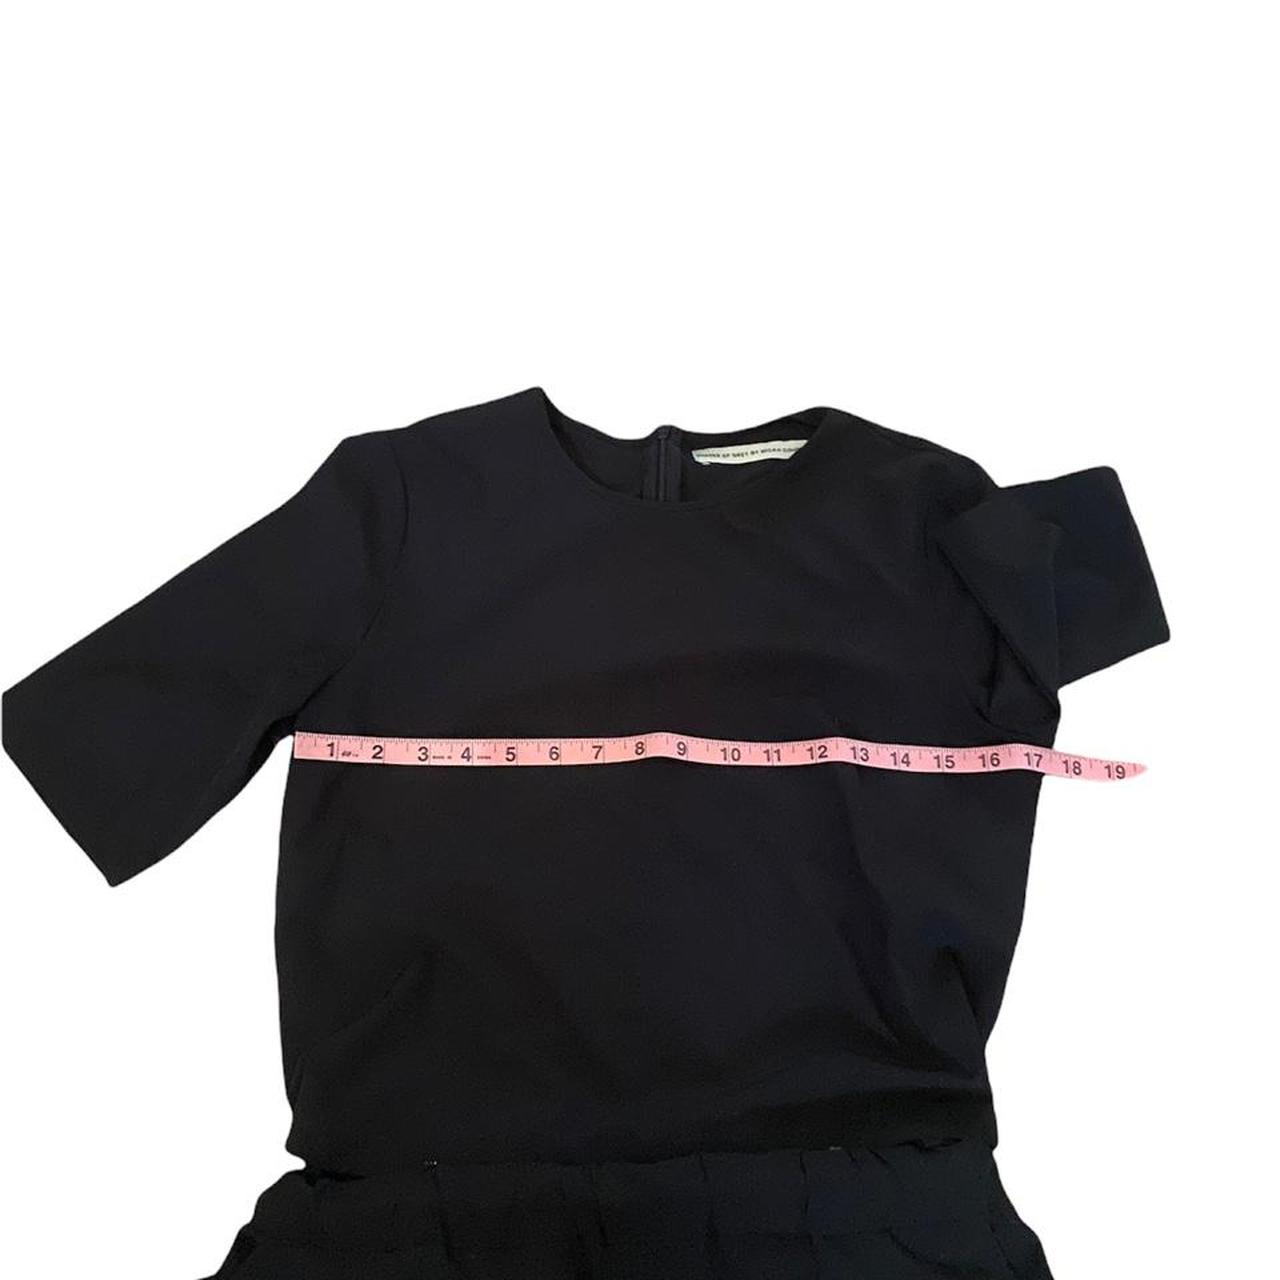 Product Image 3 - Modern black jumpsuit. Has cutout